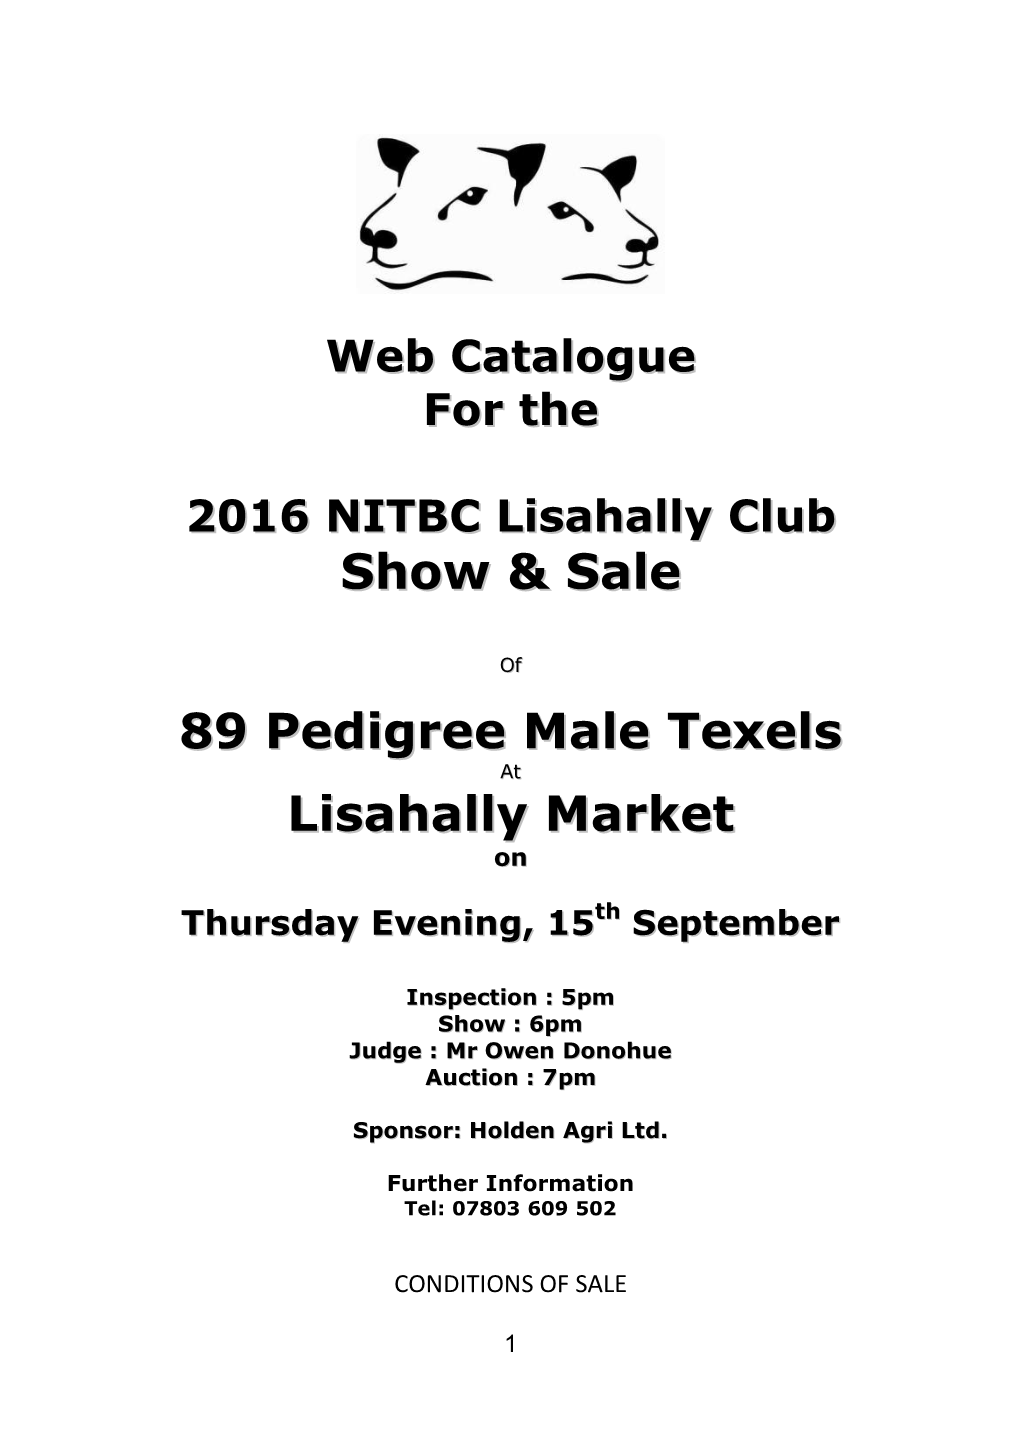 Show & Sale 89 Pedigree Male Texels Lisahally Market